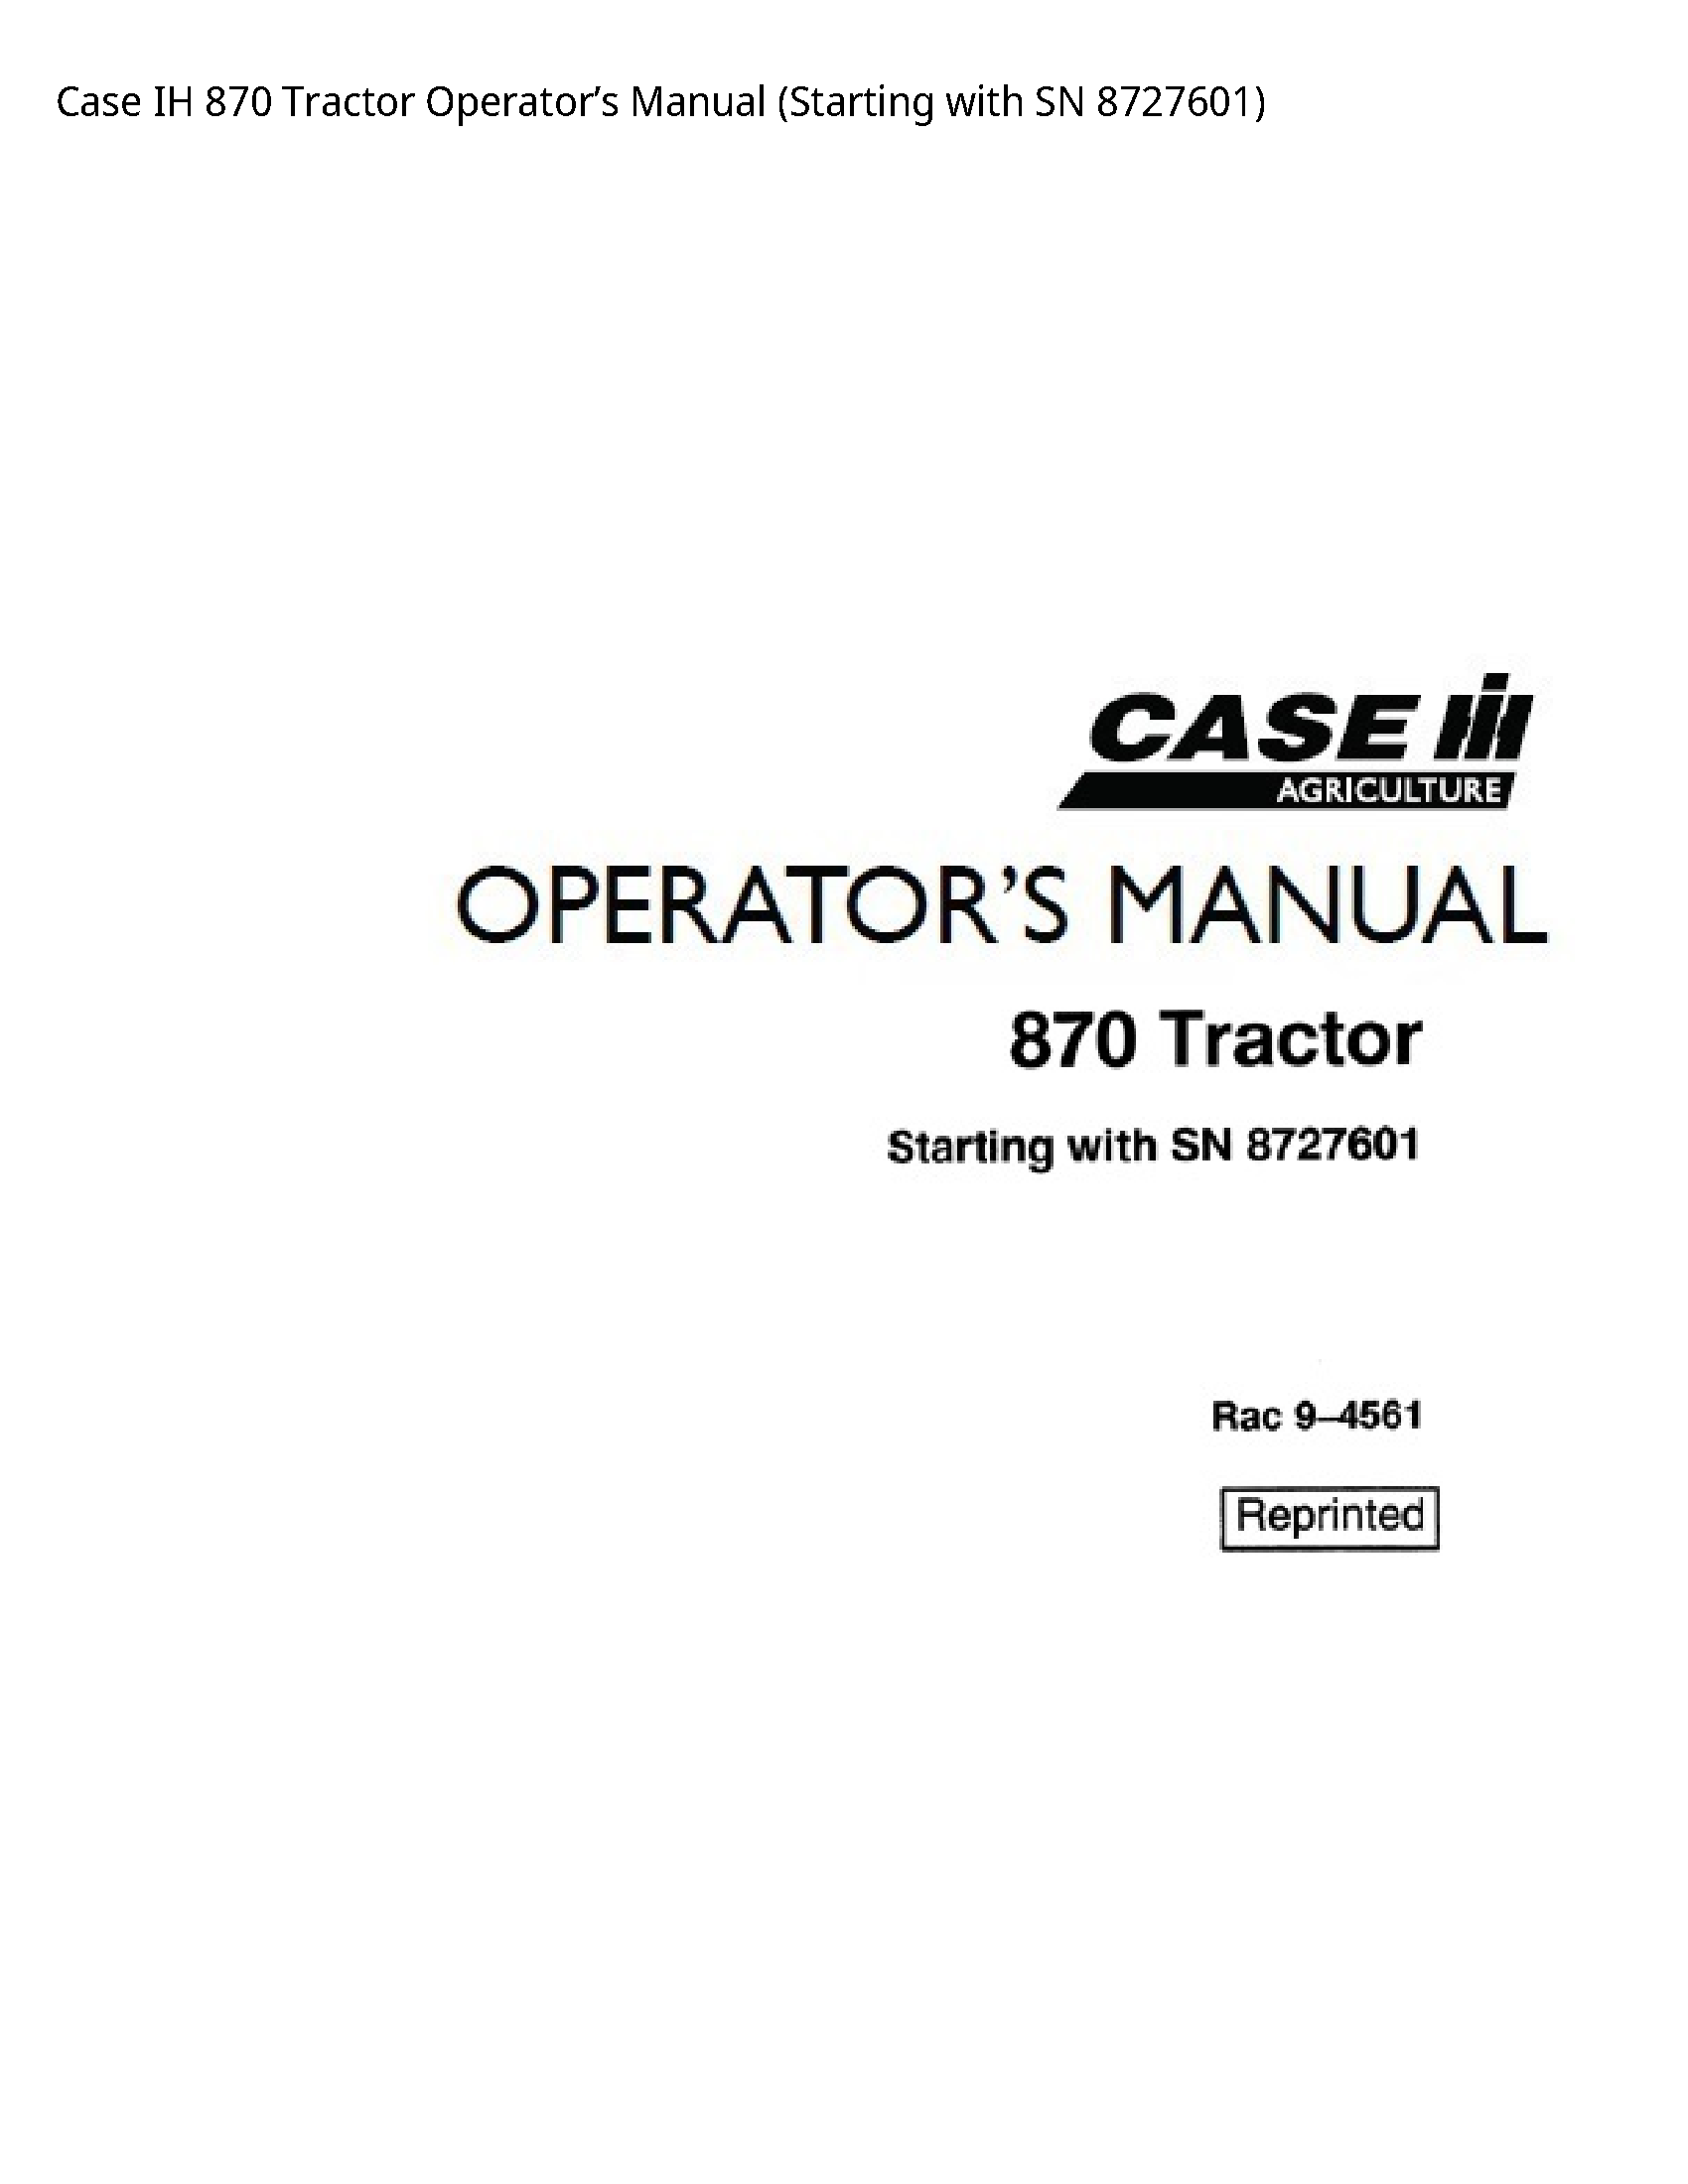 Case/Case IH 870 IH Tractor Operator’s manual